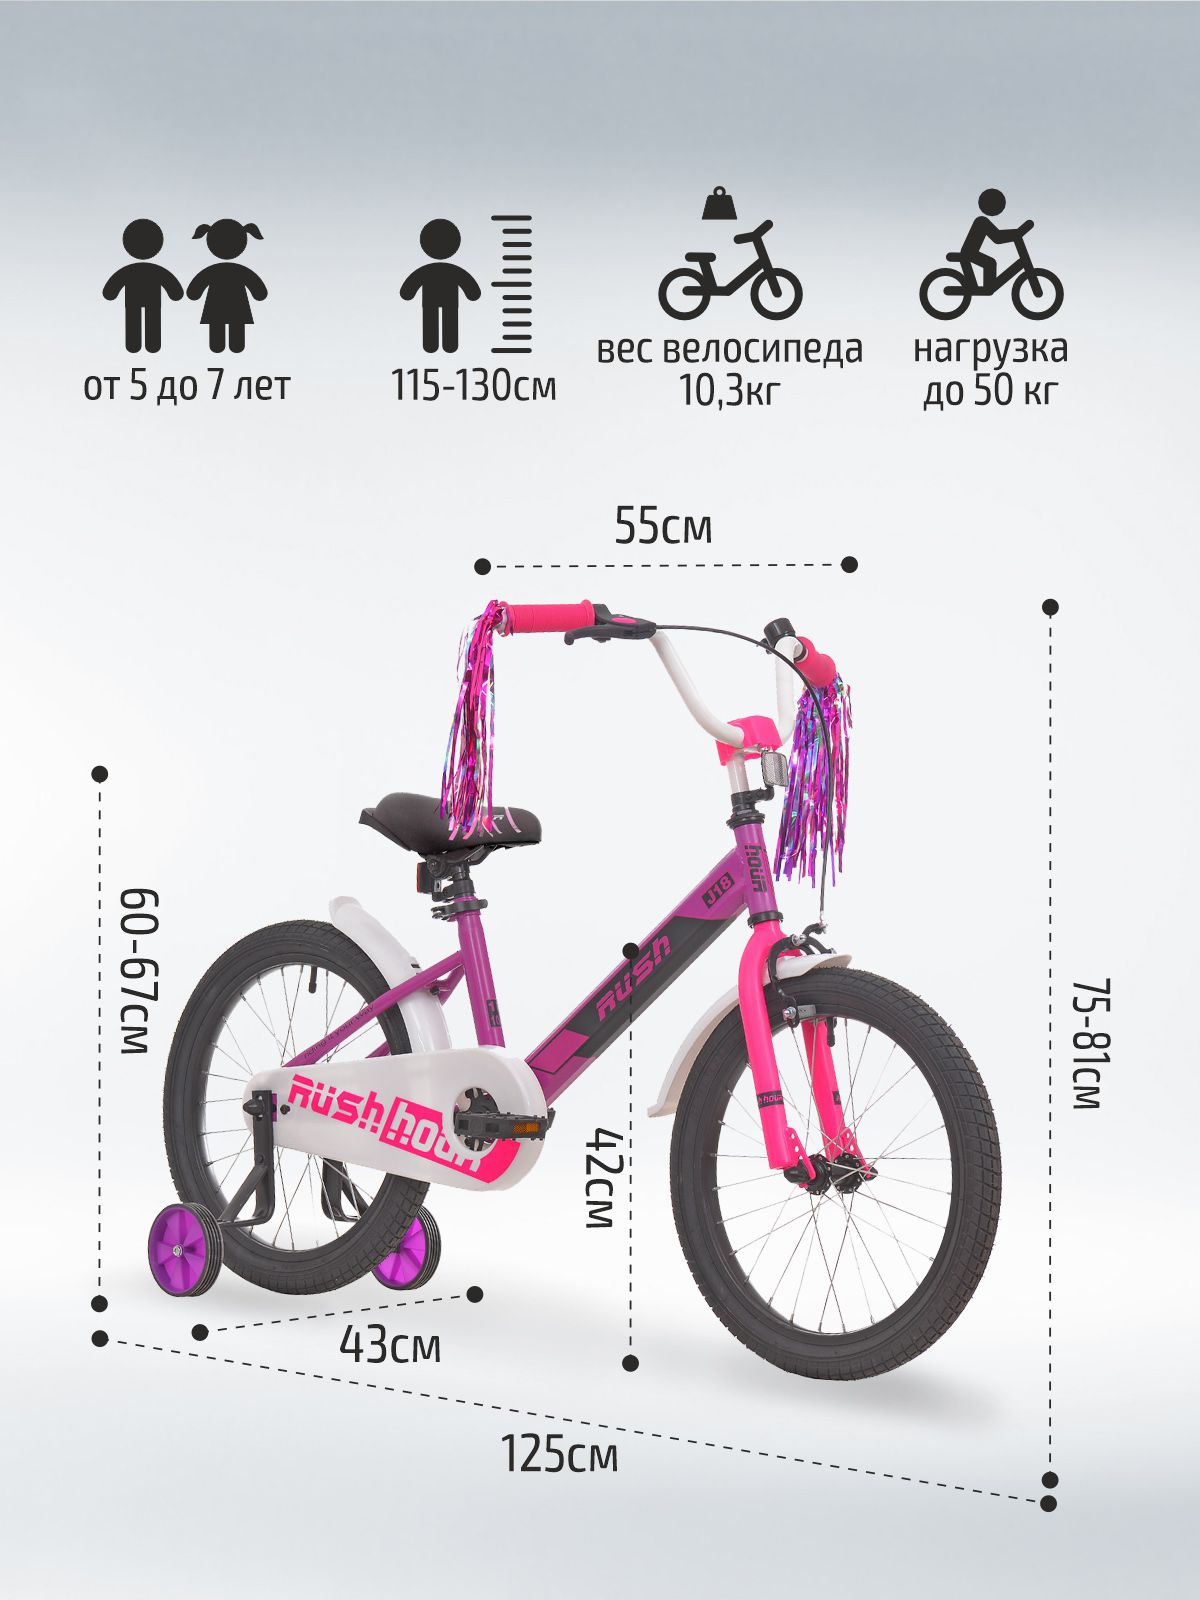 Детский велосипед Rush hour. Велосипед Rush hour j16. Велосипед детский Rush hour фиолетовый. Велосипед двухколесный детский 16" дюймов рост 110-125 см Rush hour. Велосипед 16 дюймов ростов